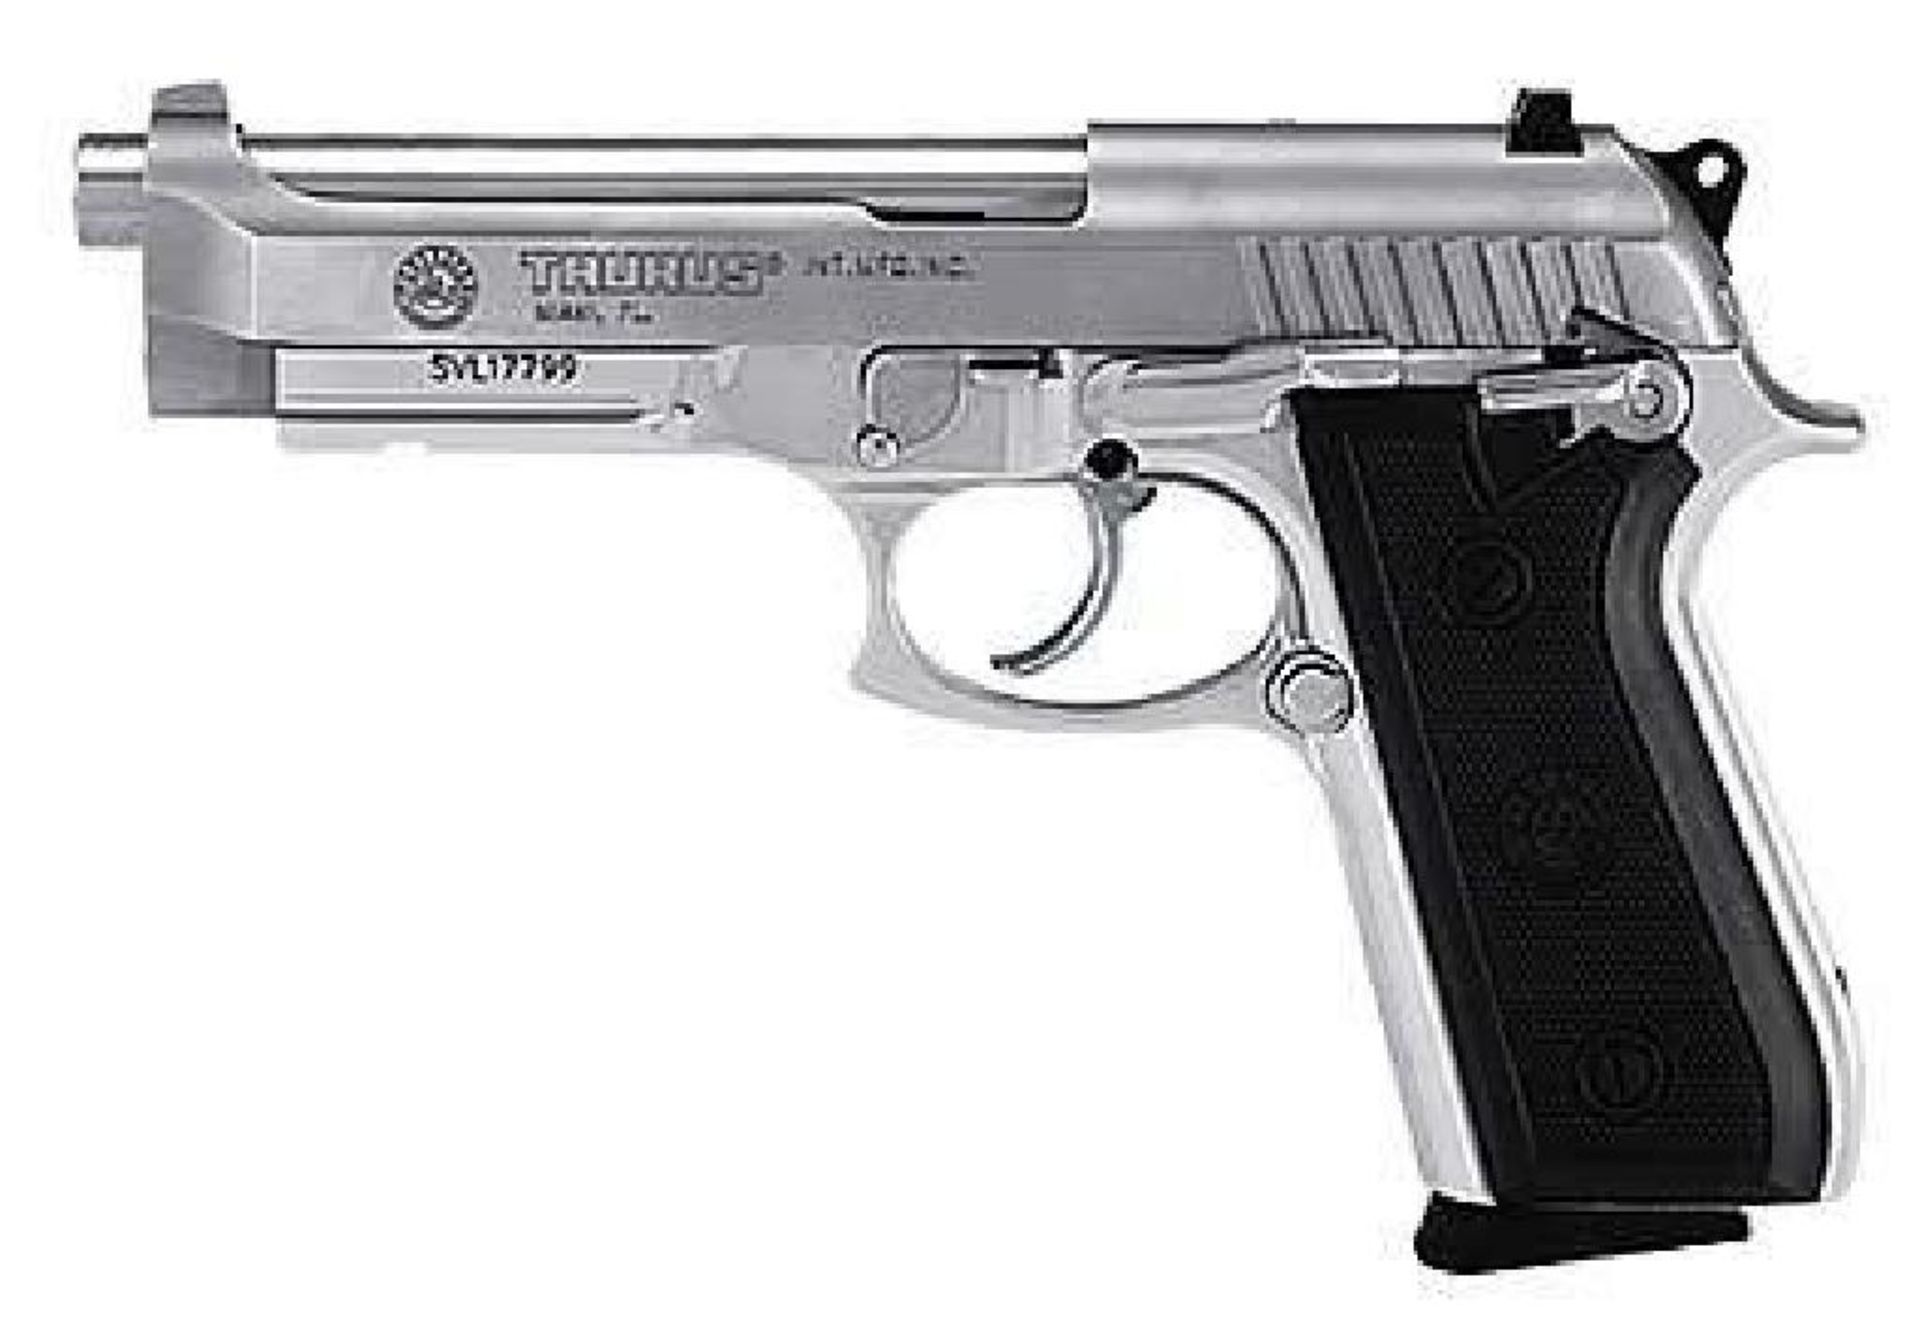 FAMILY:PT Pistol Series   MODEL:PT-92   TYPE:Semi-Auto Pistol   ACTION:Double / Single Action